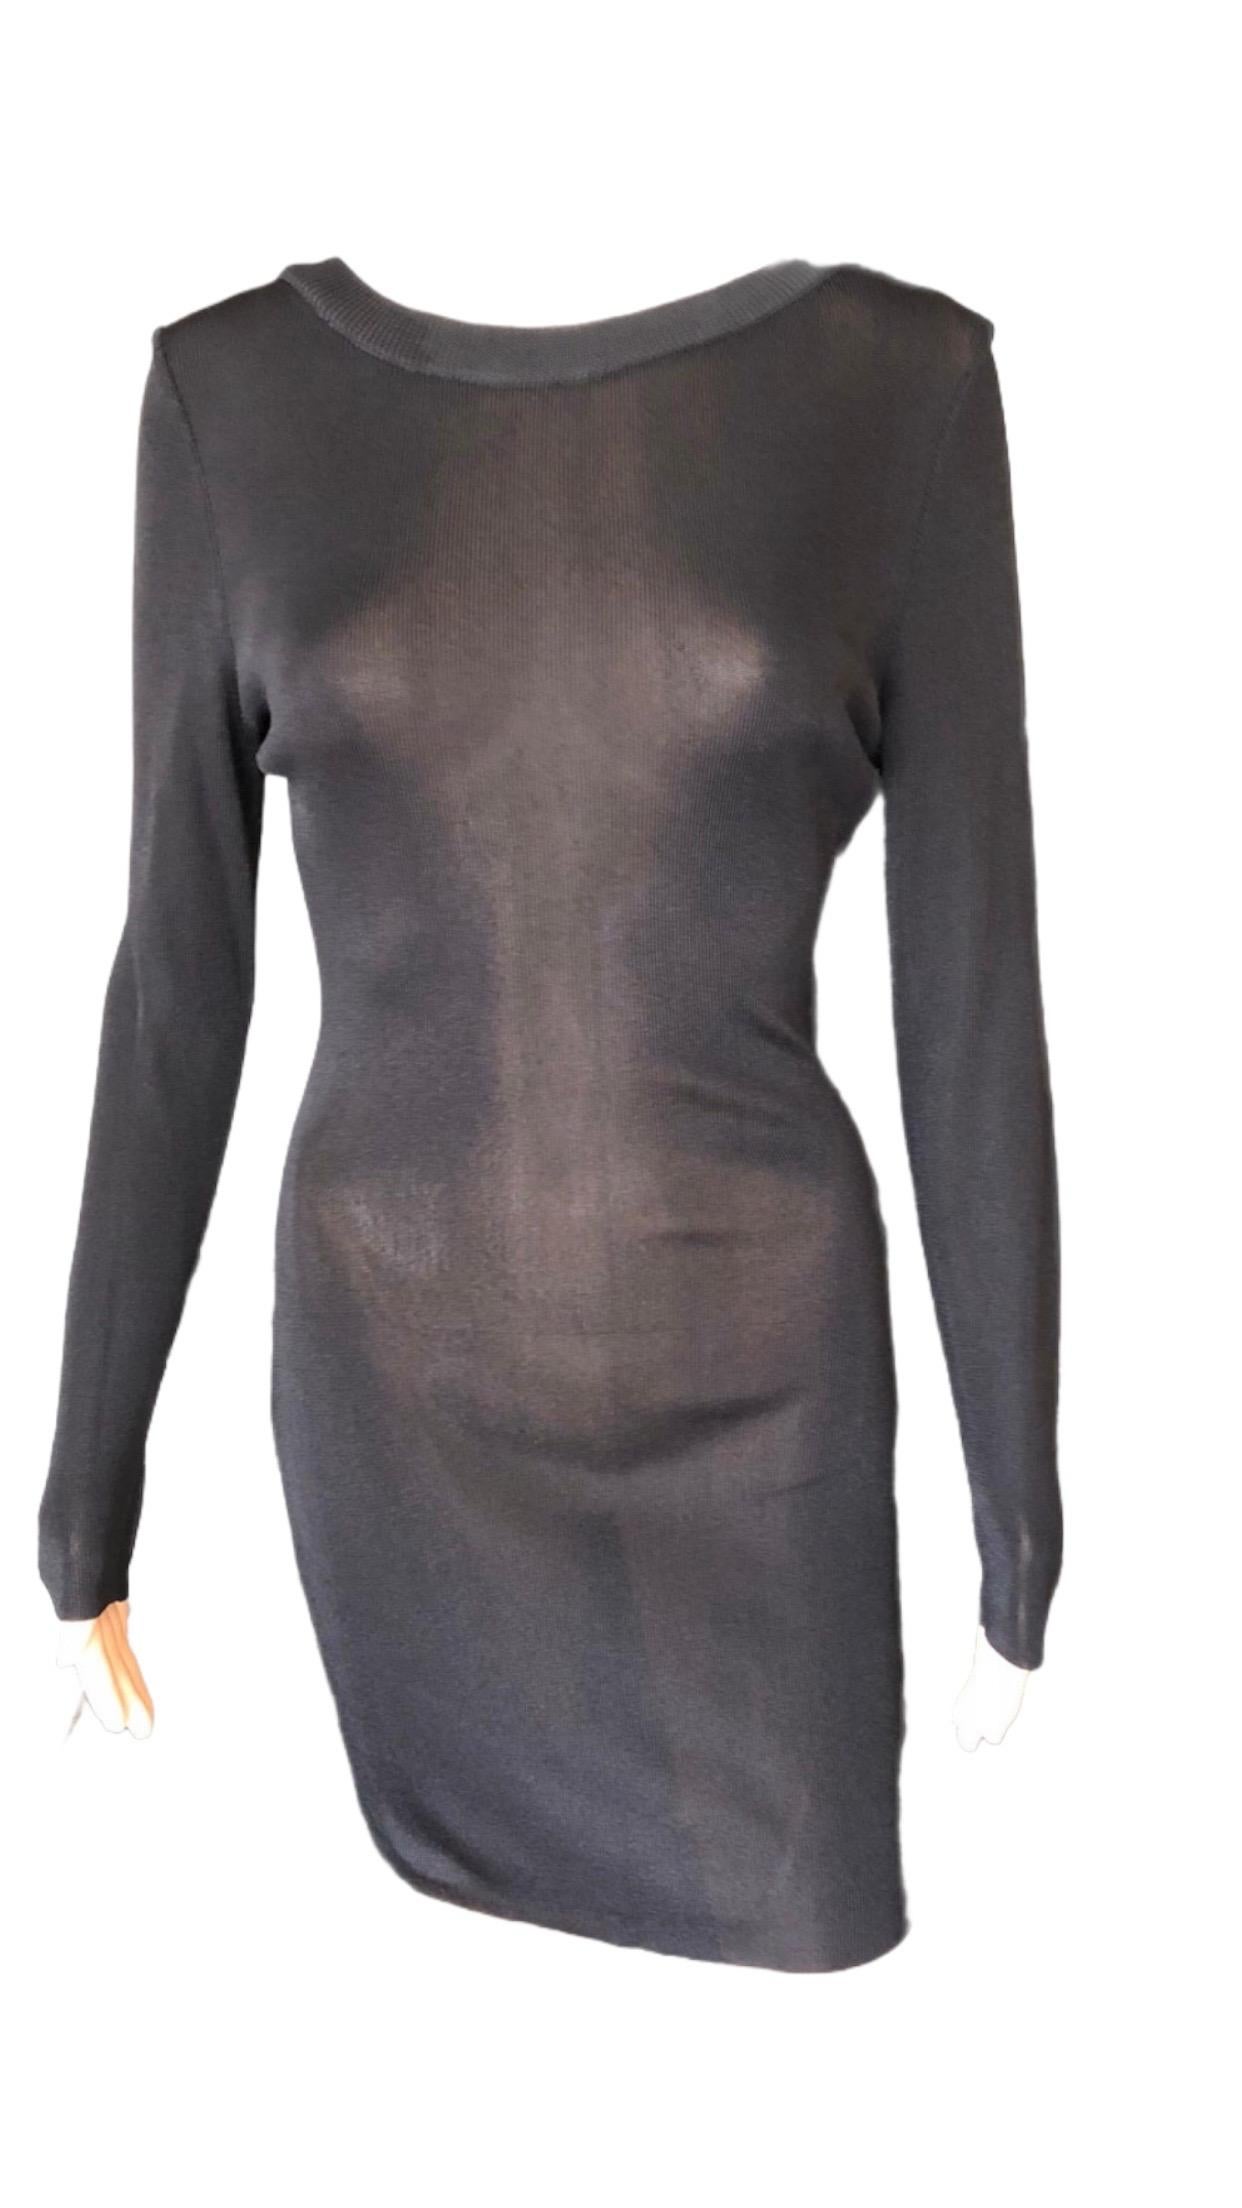 Gianni Versace c. 1980 Vintage Semi-Sheer Bodycon Knit Black Dress For Sale 9